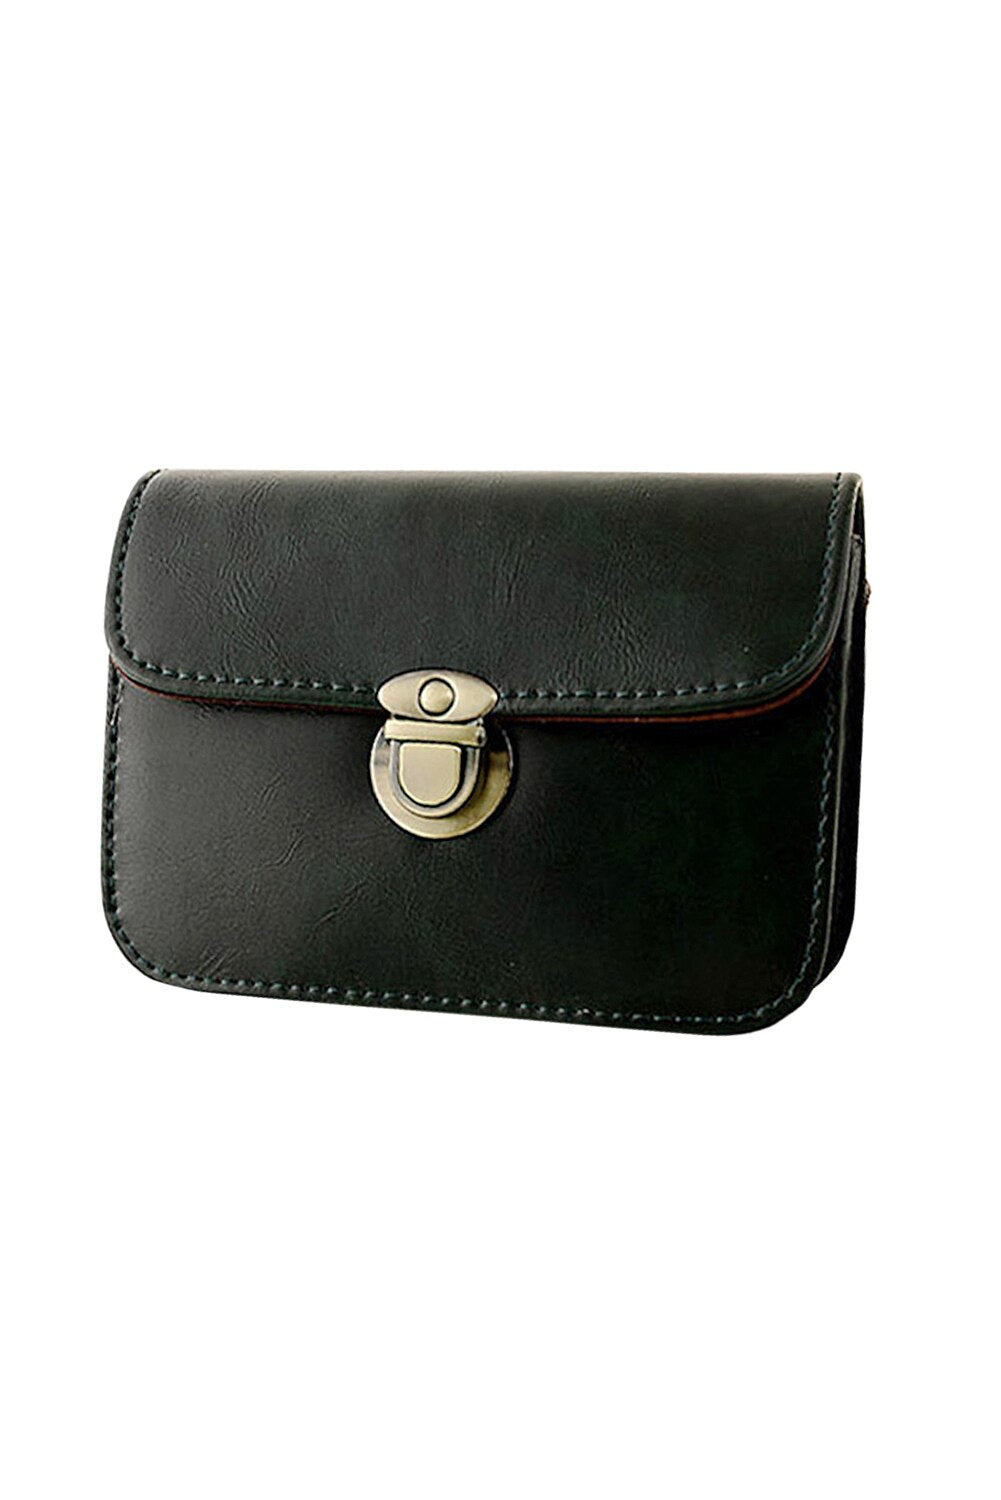 New Fashion Women Messenger bags Chain Shoulder Bag PU Leather Candy Color Crossbody Mini Bag - black - ebowsos